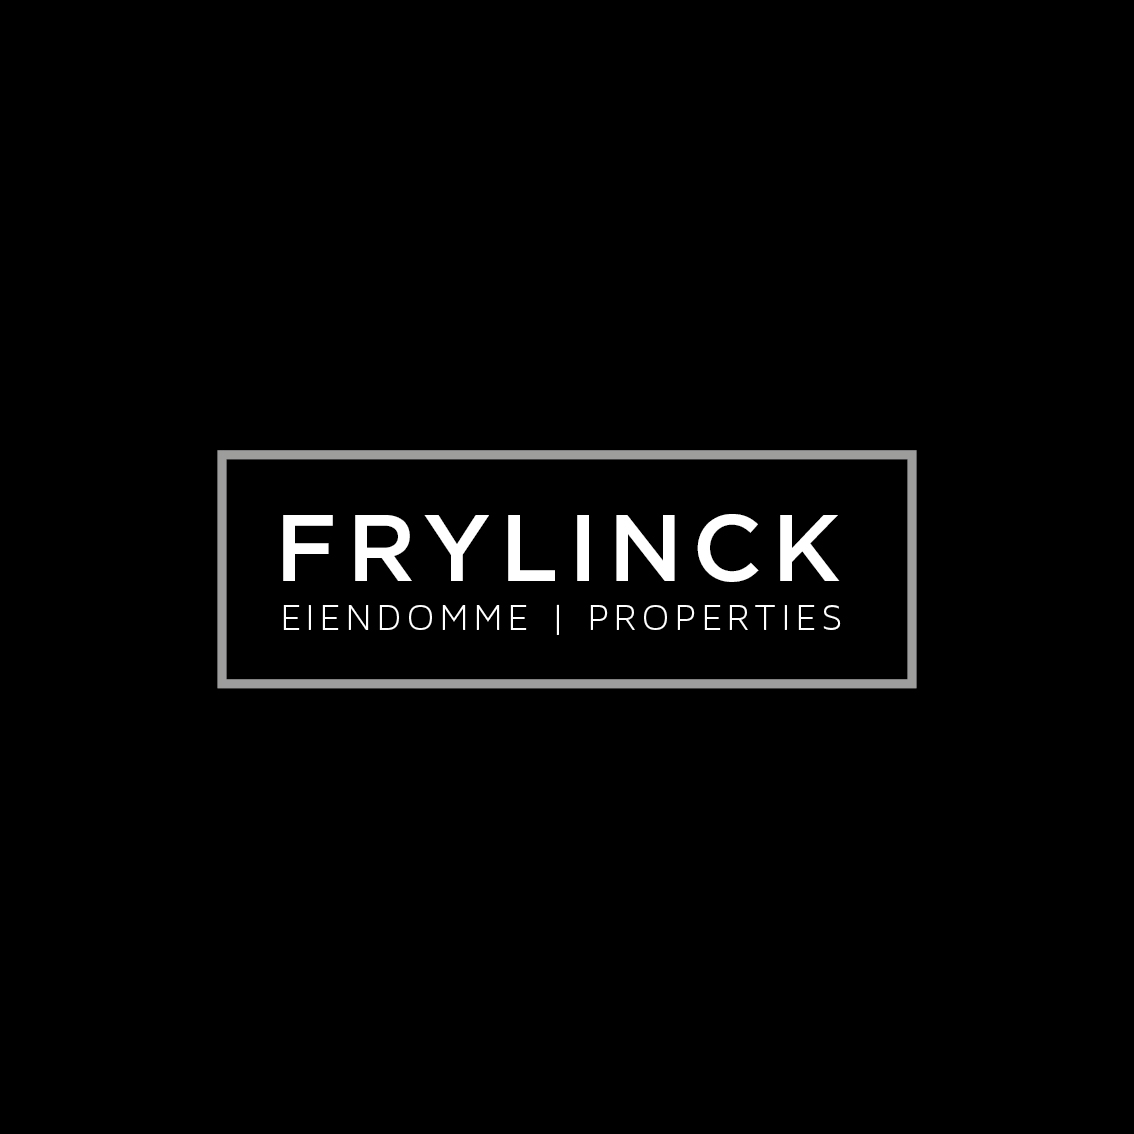 Frylinck Properties